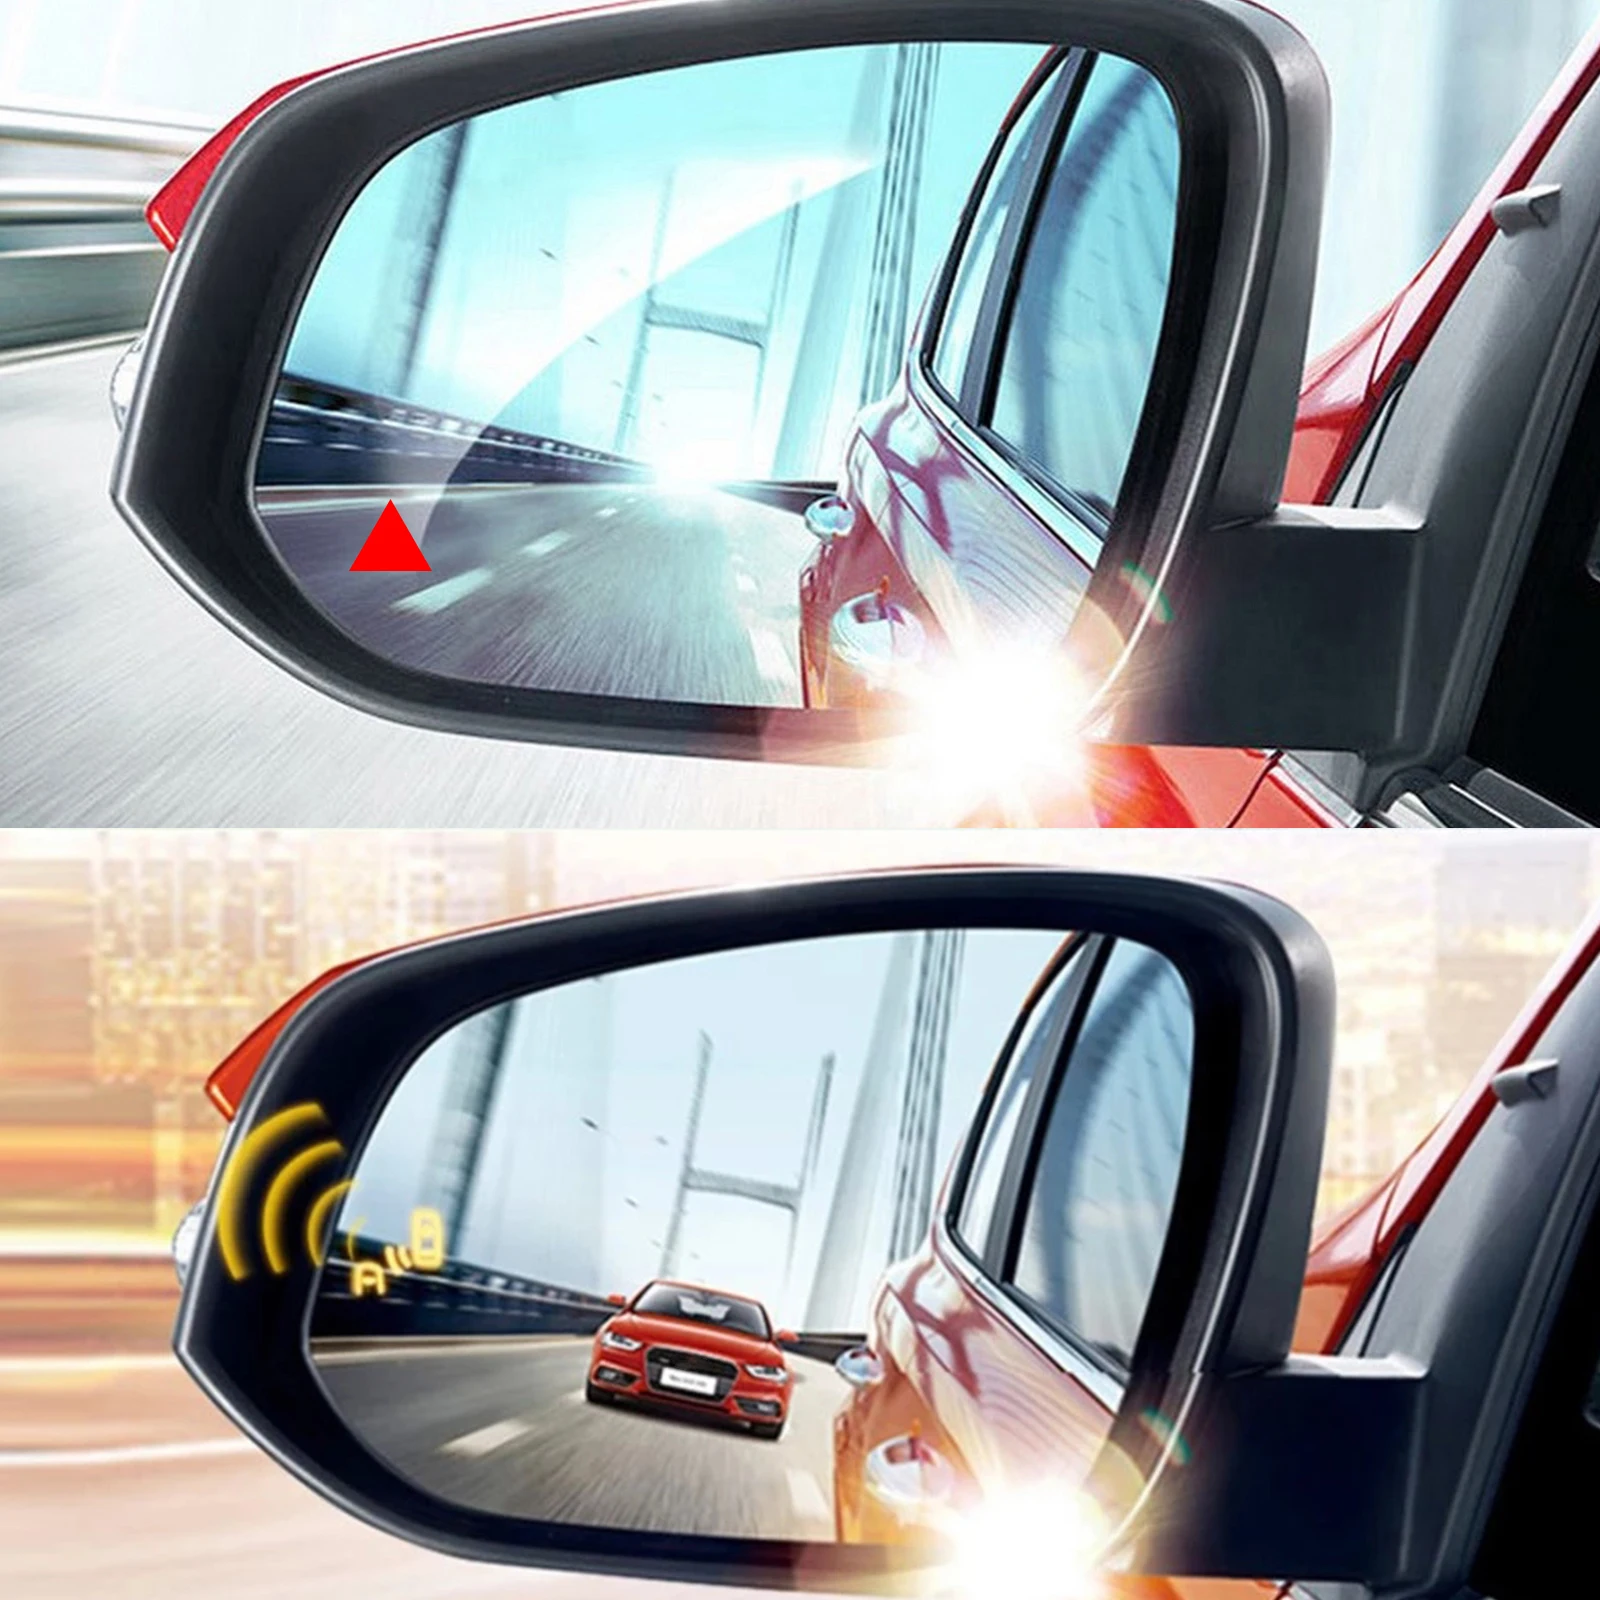 

BSD Lens Light Car Blind Spot Monitoring System Alarm Radar Safety Driving Ultrasonic Sensor Distance Assist Lane Changing Tool